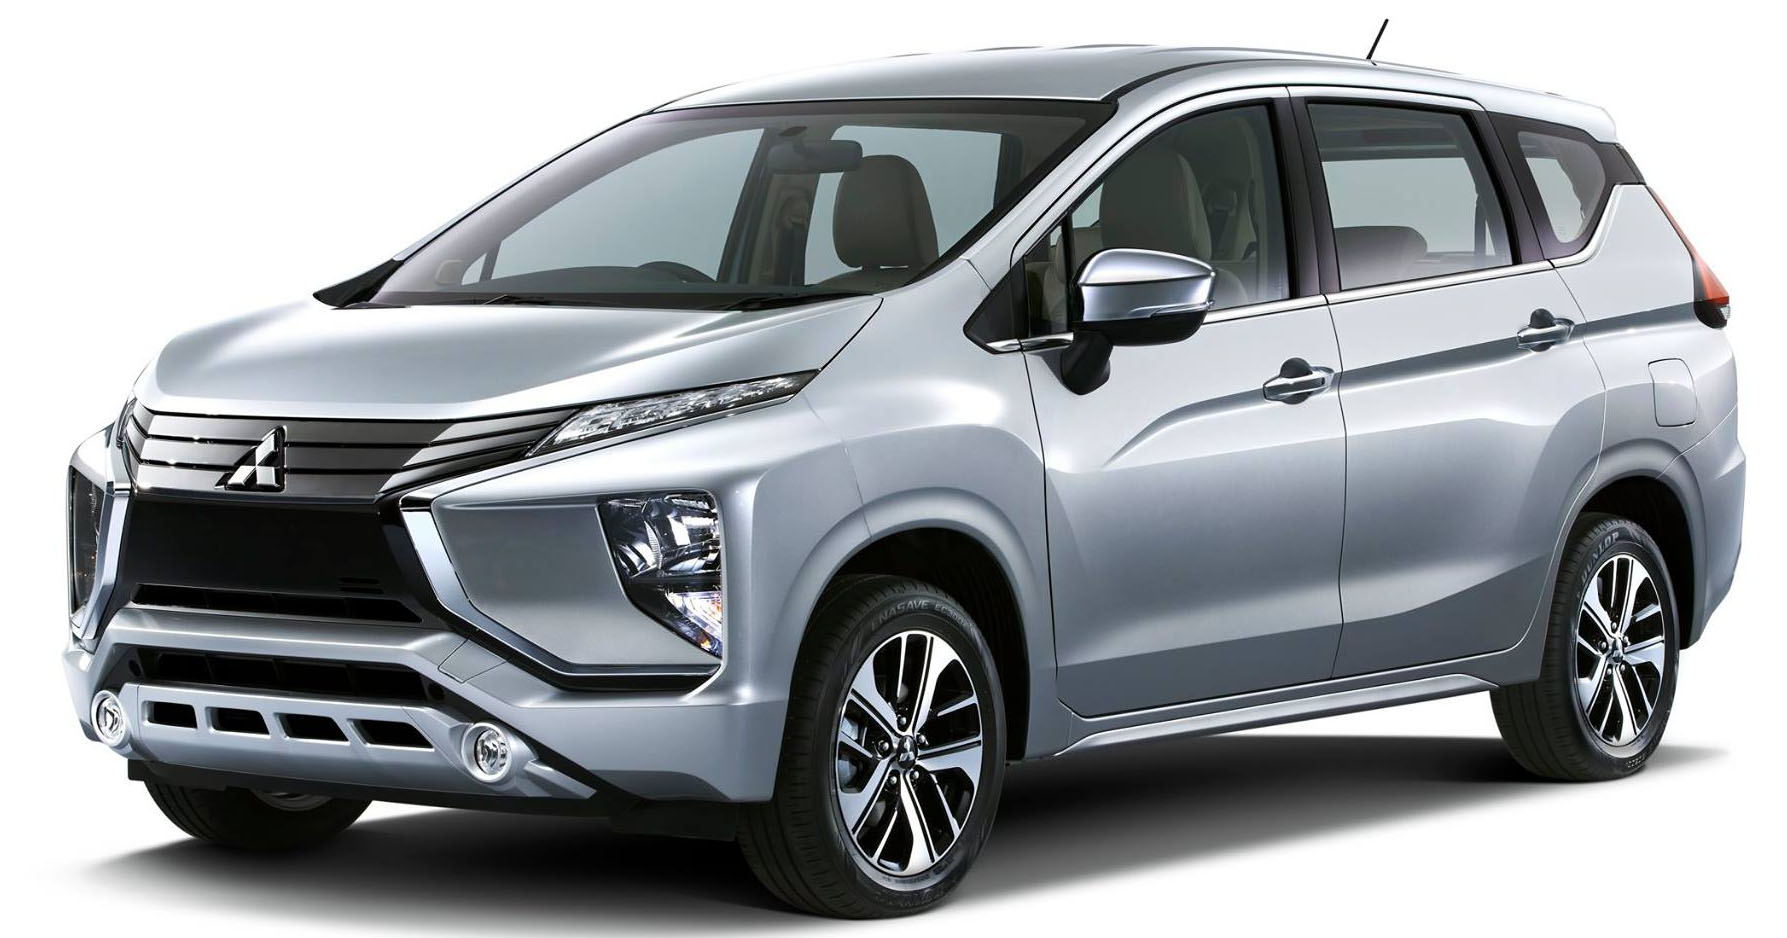 Mitsubishi reveals nextgen MPV ahead of GIIAS 2017  1.5L 